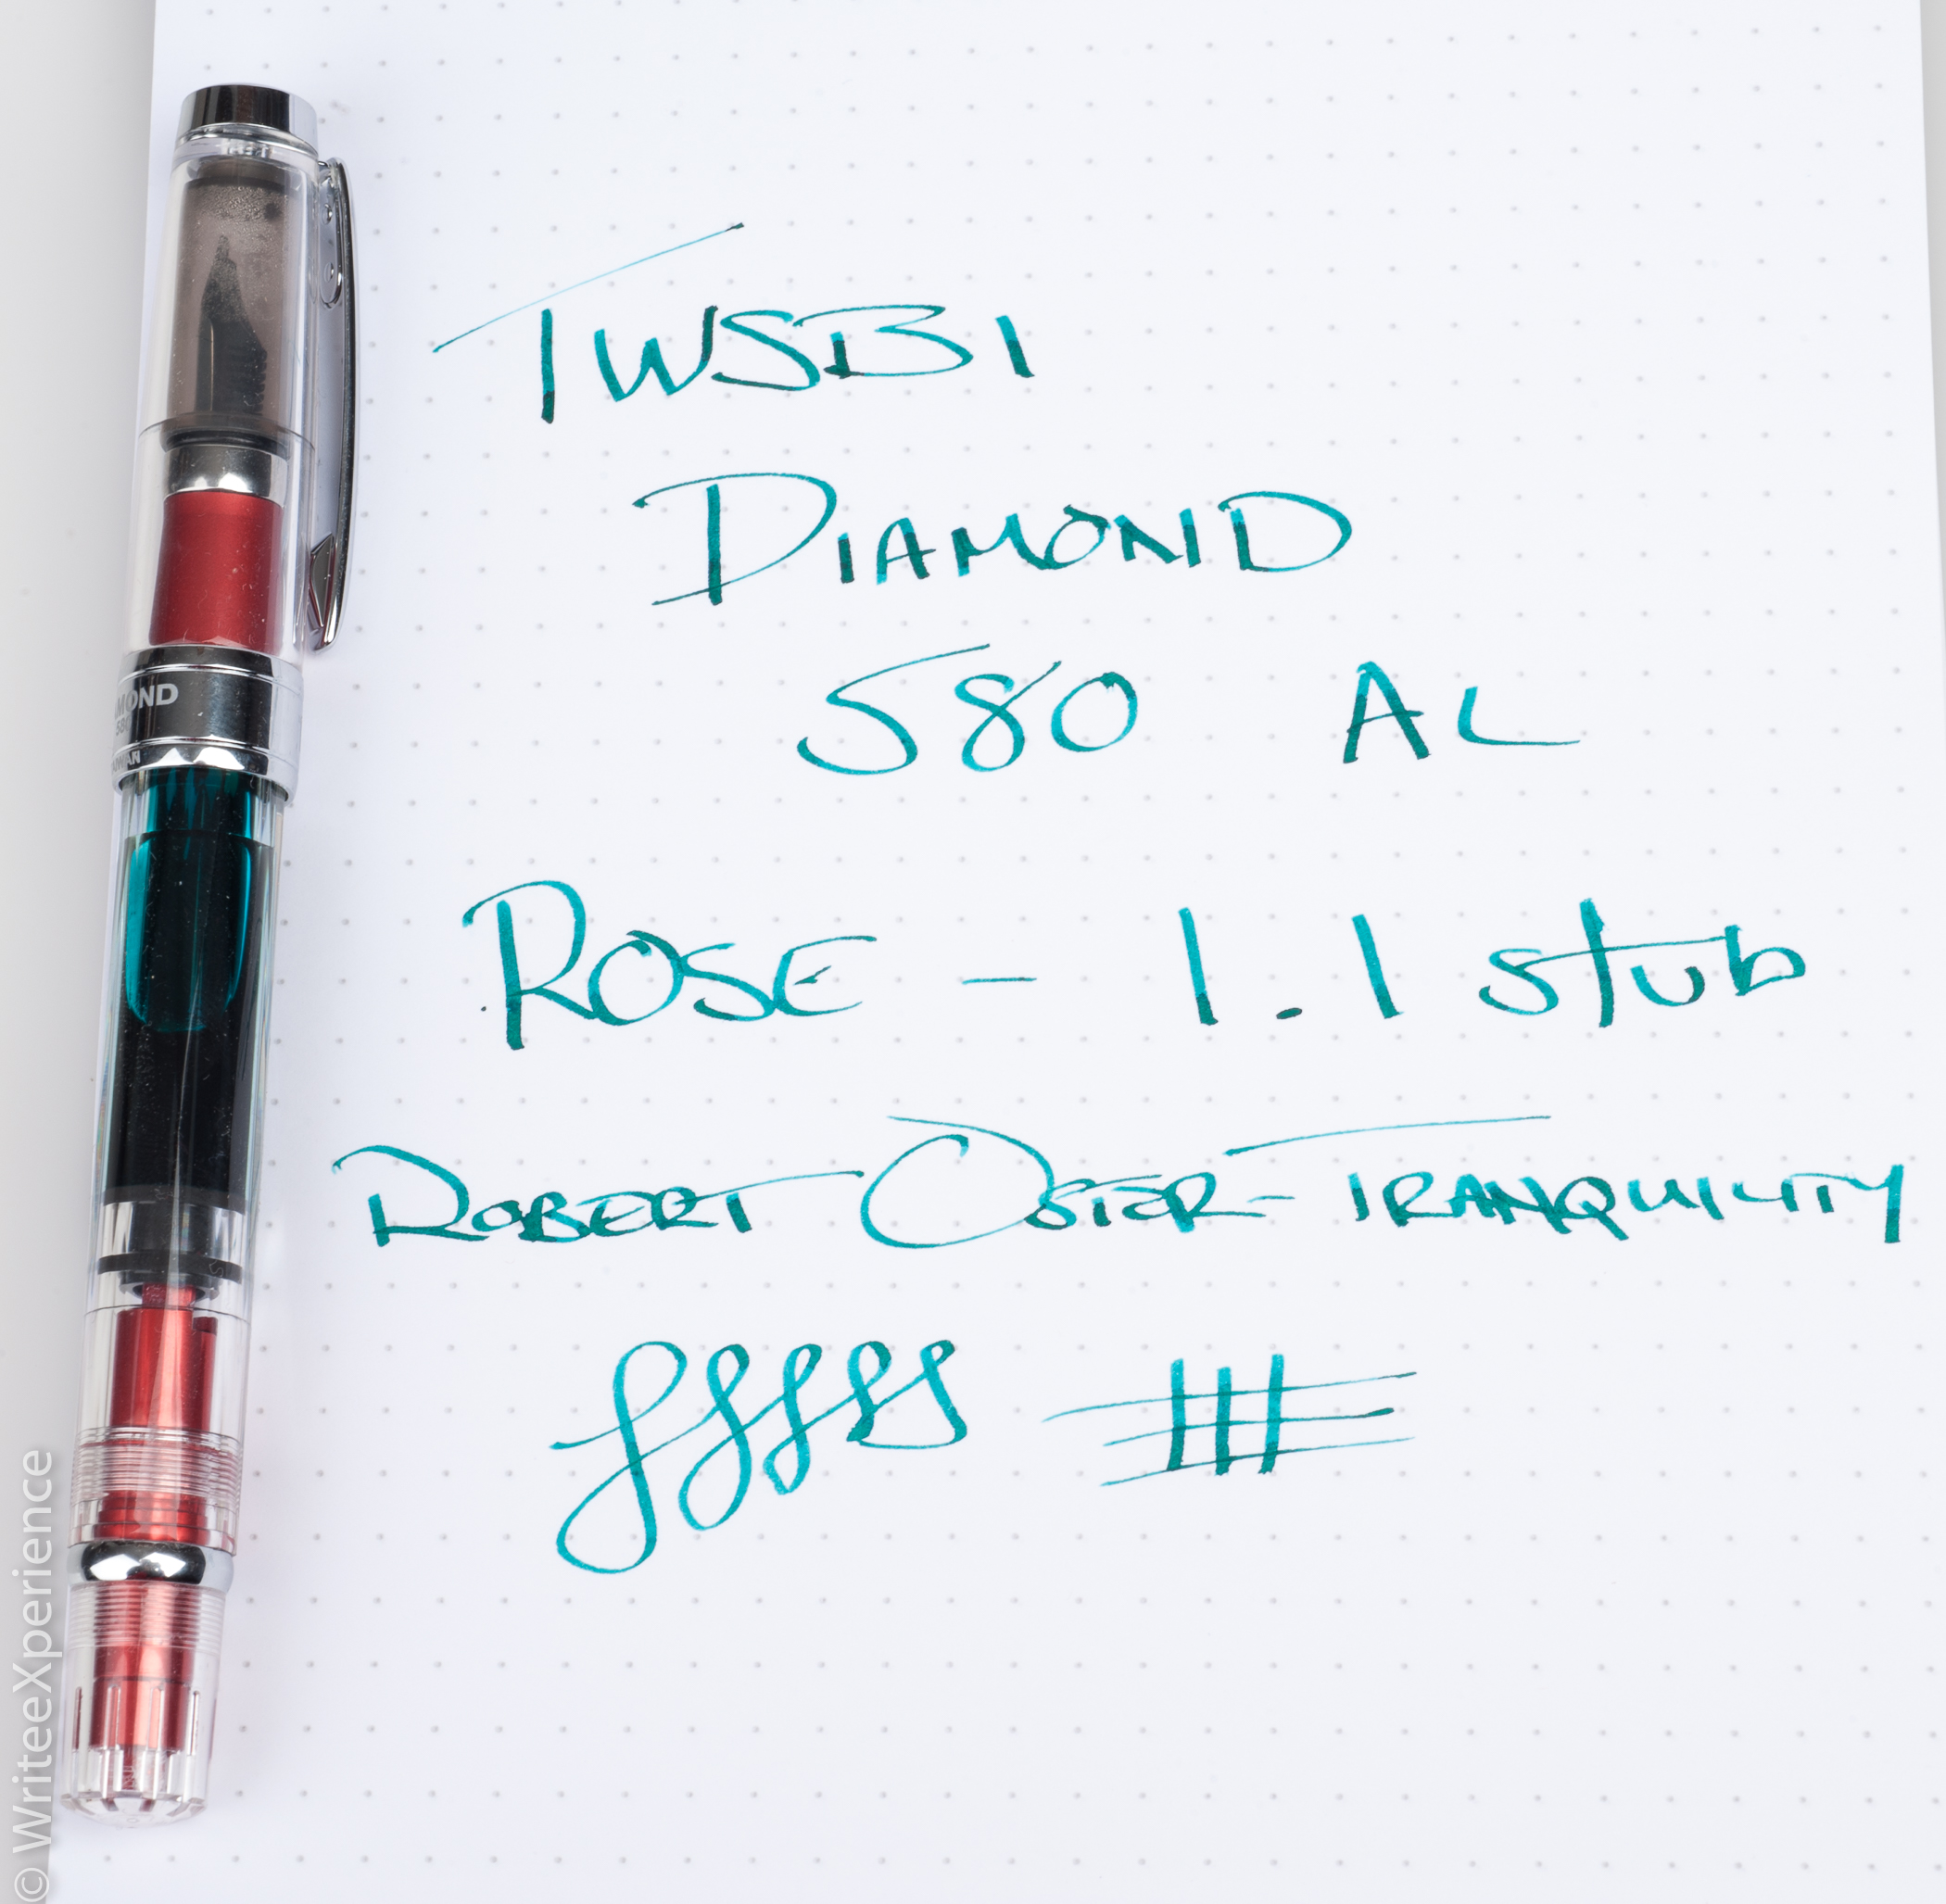 TWSBI Diamond 580ALR Rose Fountain Pen NEW TO MARKET